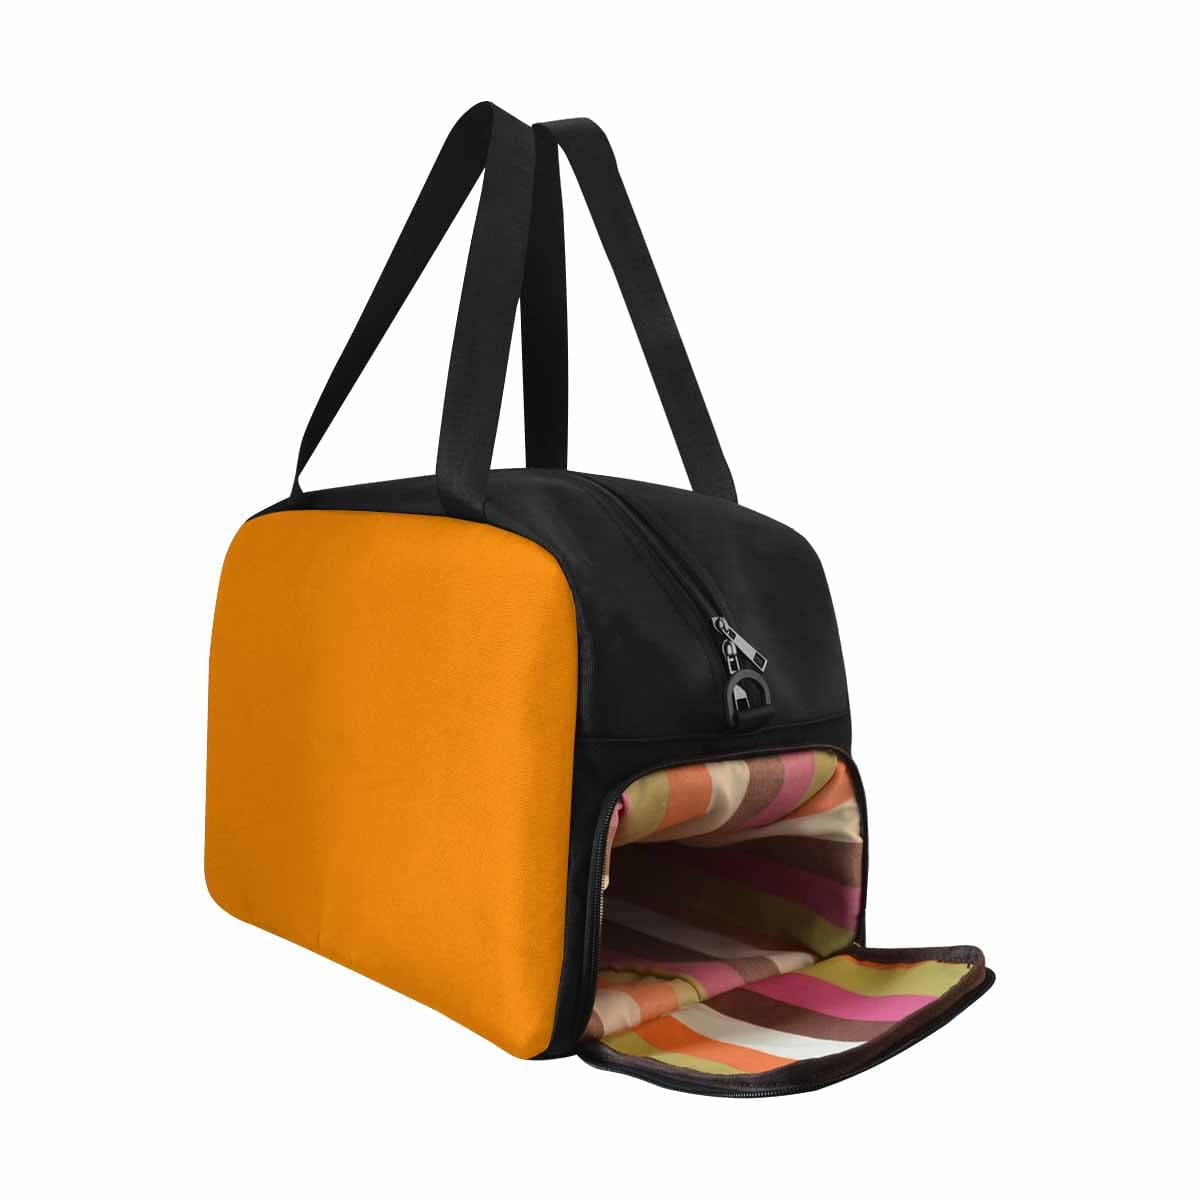 Tangerine Orange Tote And Crossbody Travel Bag - Bags | Travel Bags | Crossbody